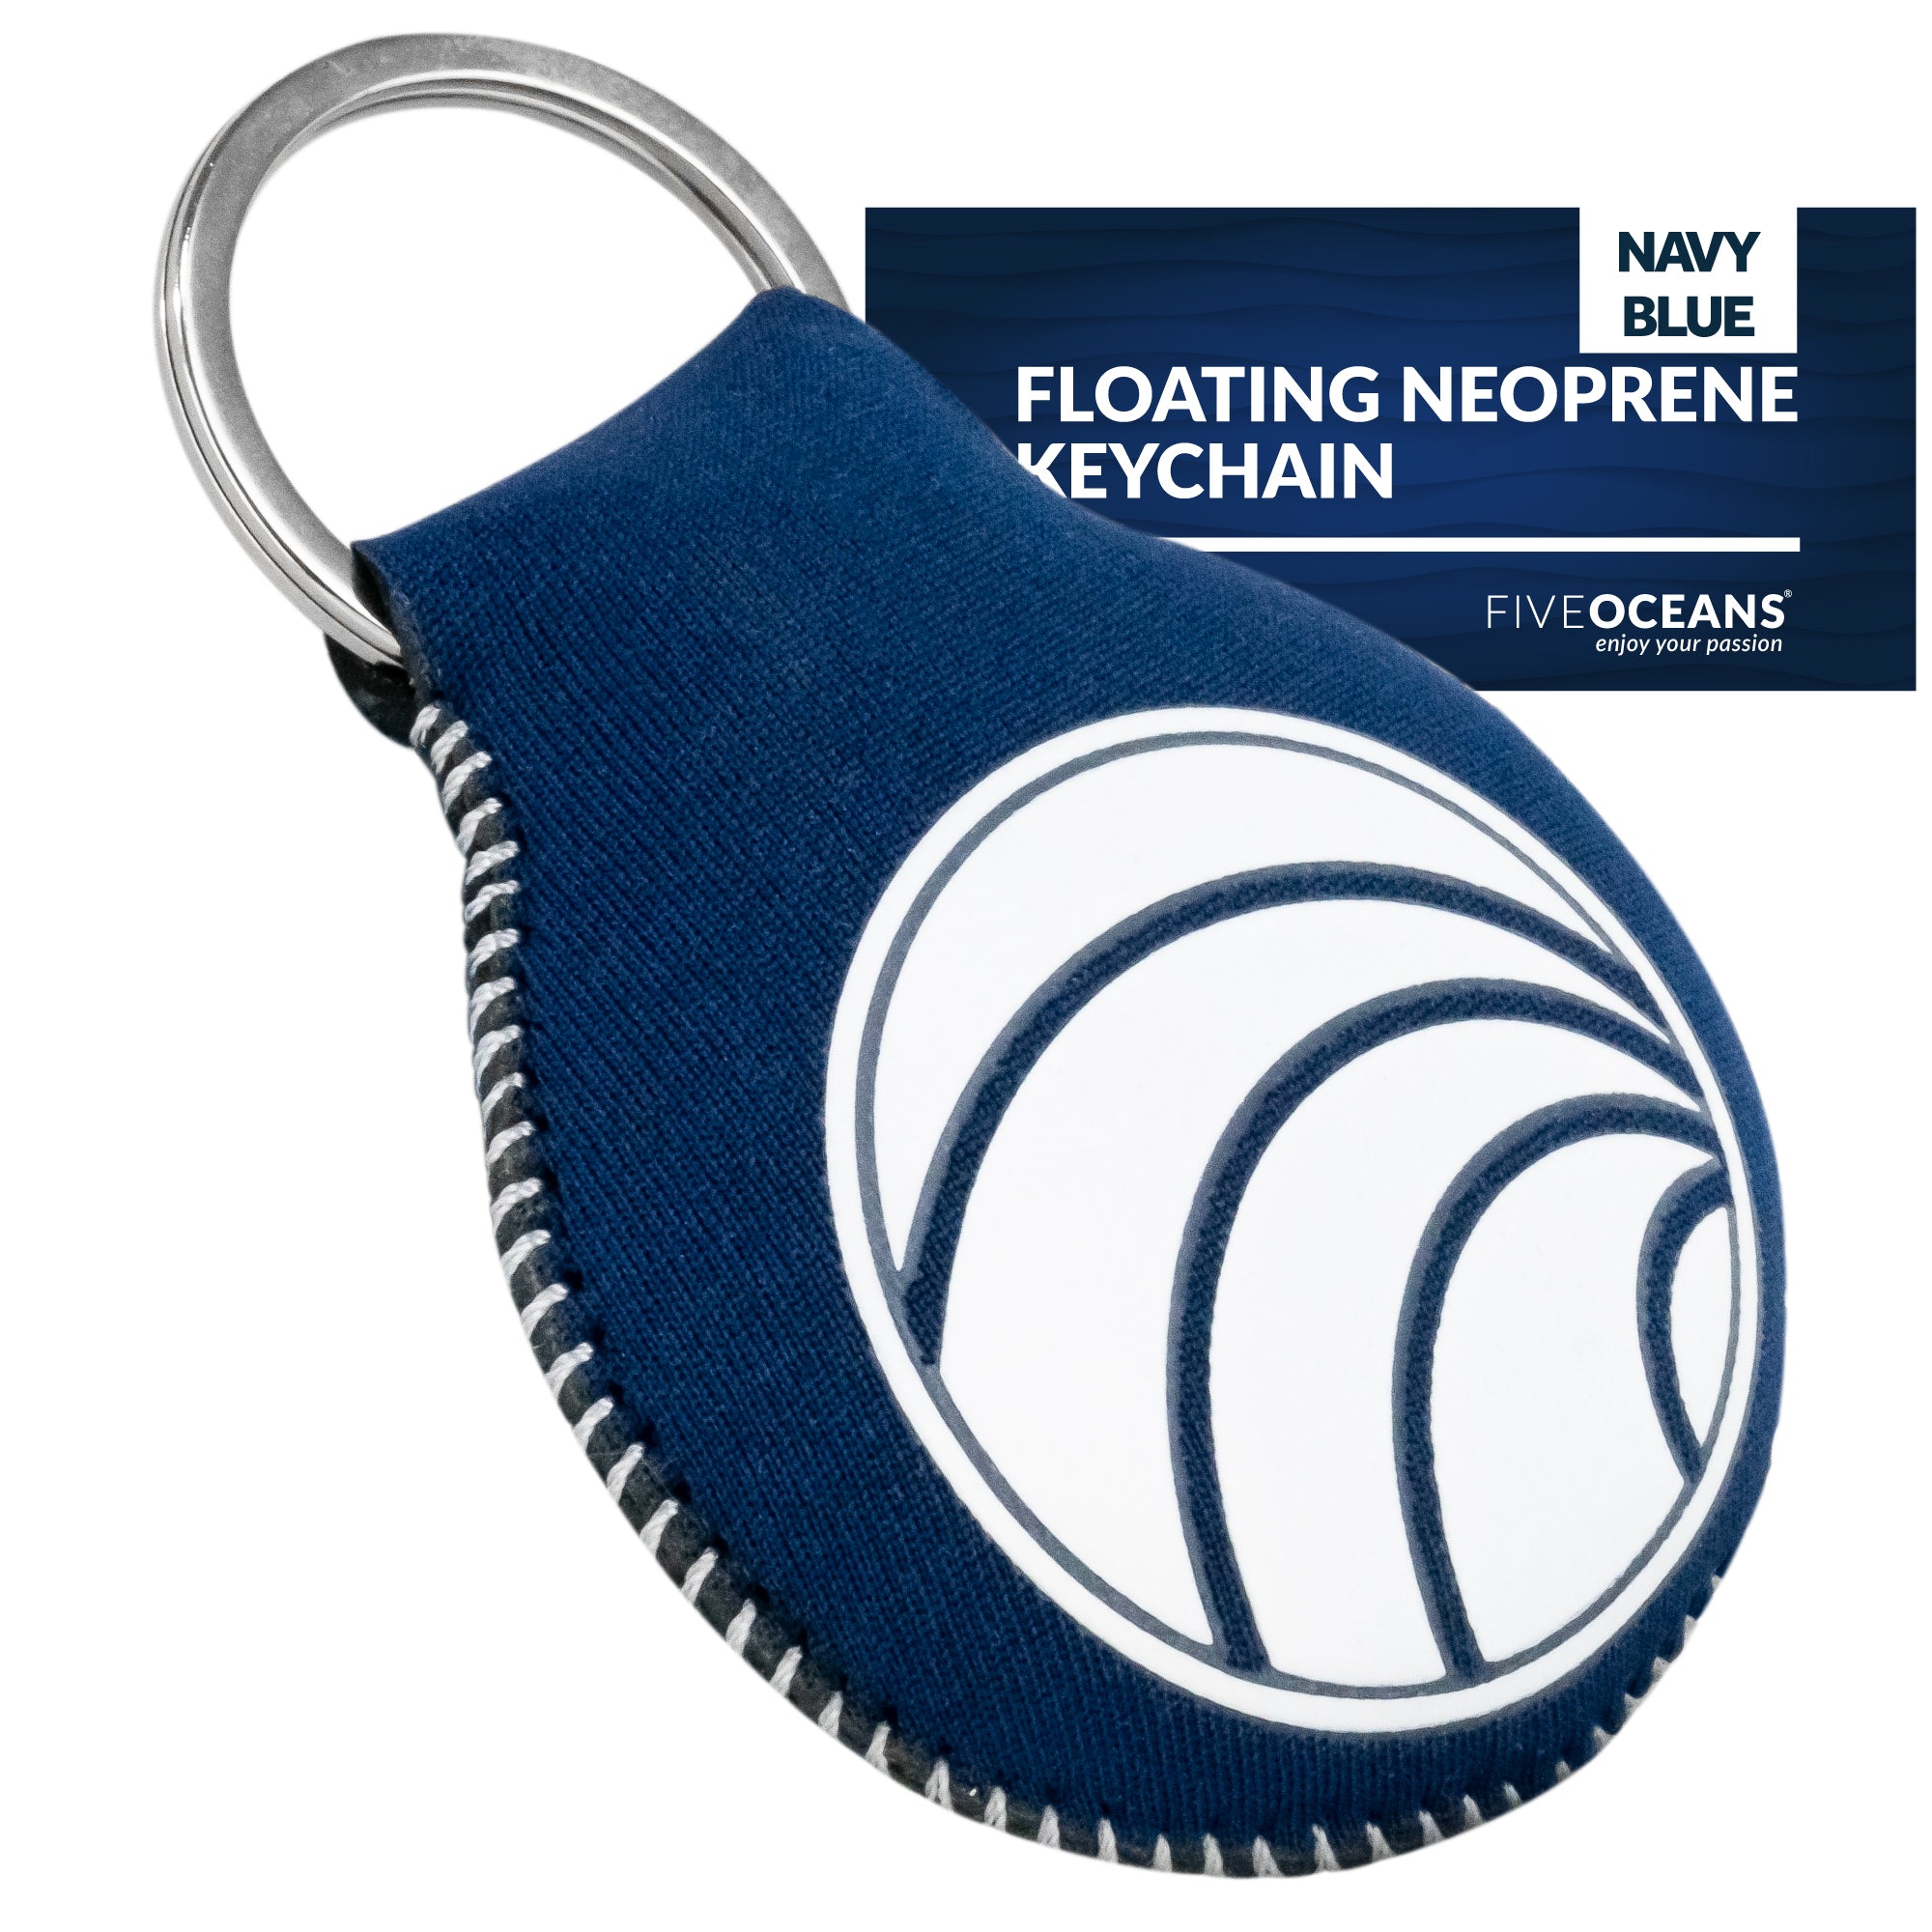 Floating Neoprene Keychain, Navy Blue - FO4495